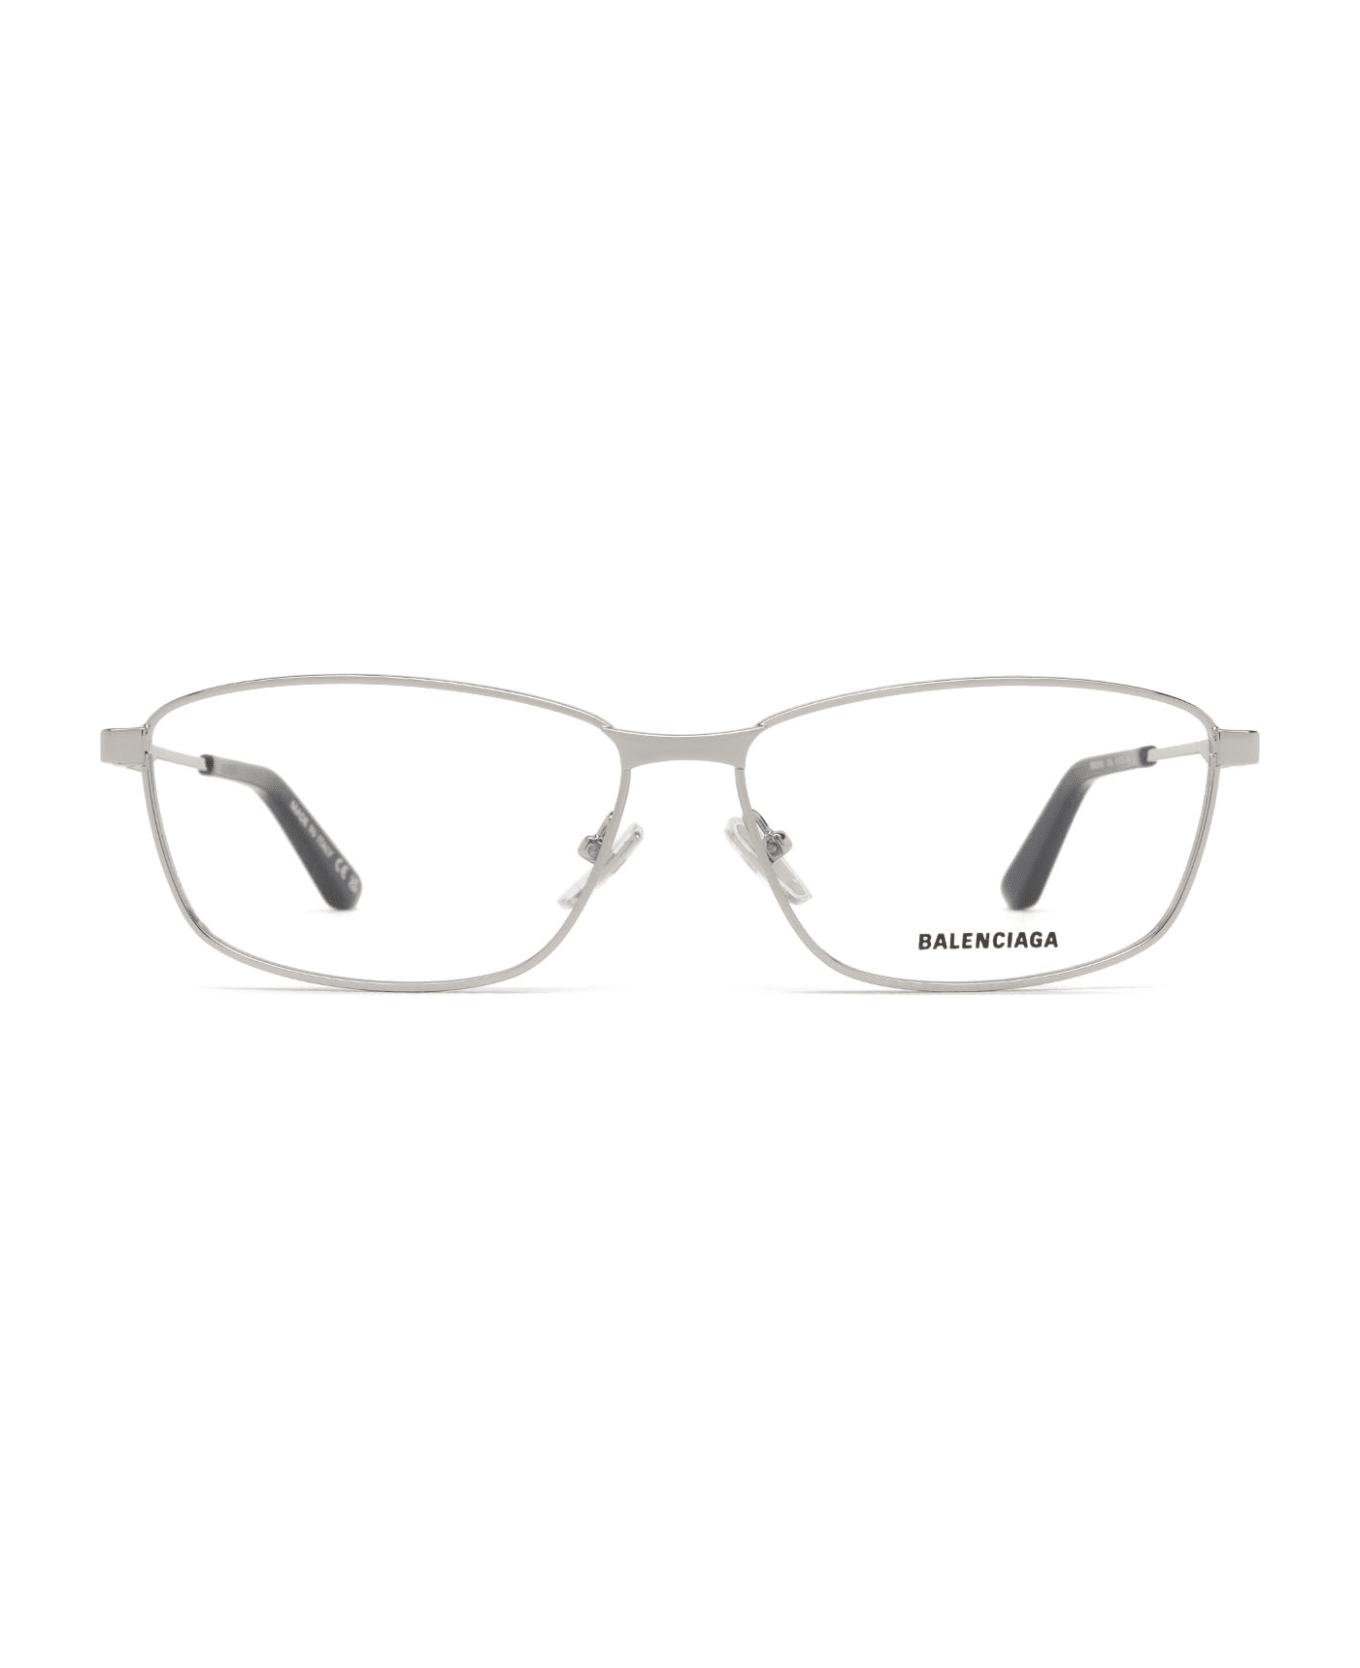 Balenciaga Eyewear Bb0283o Ruthenium Glasses - Ruthenium